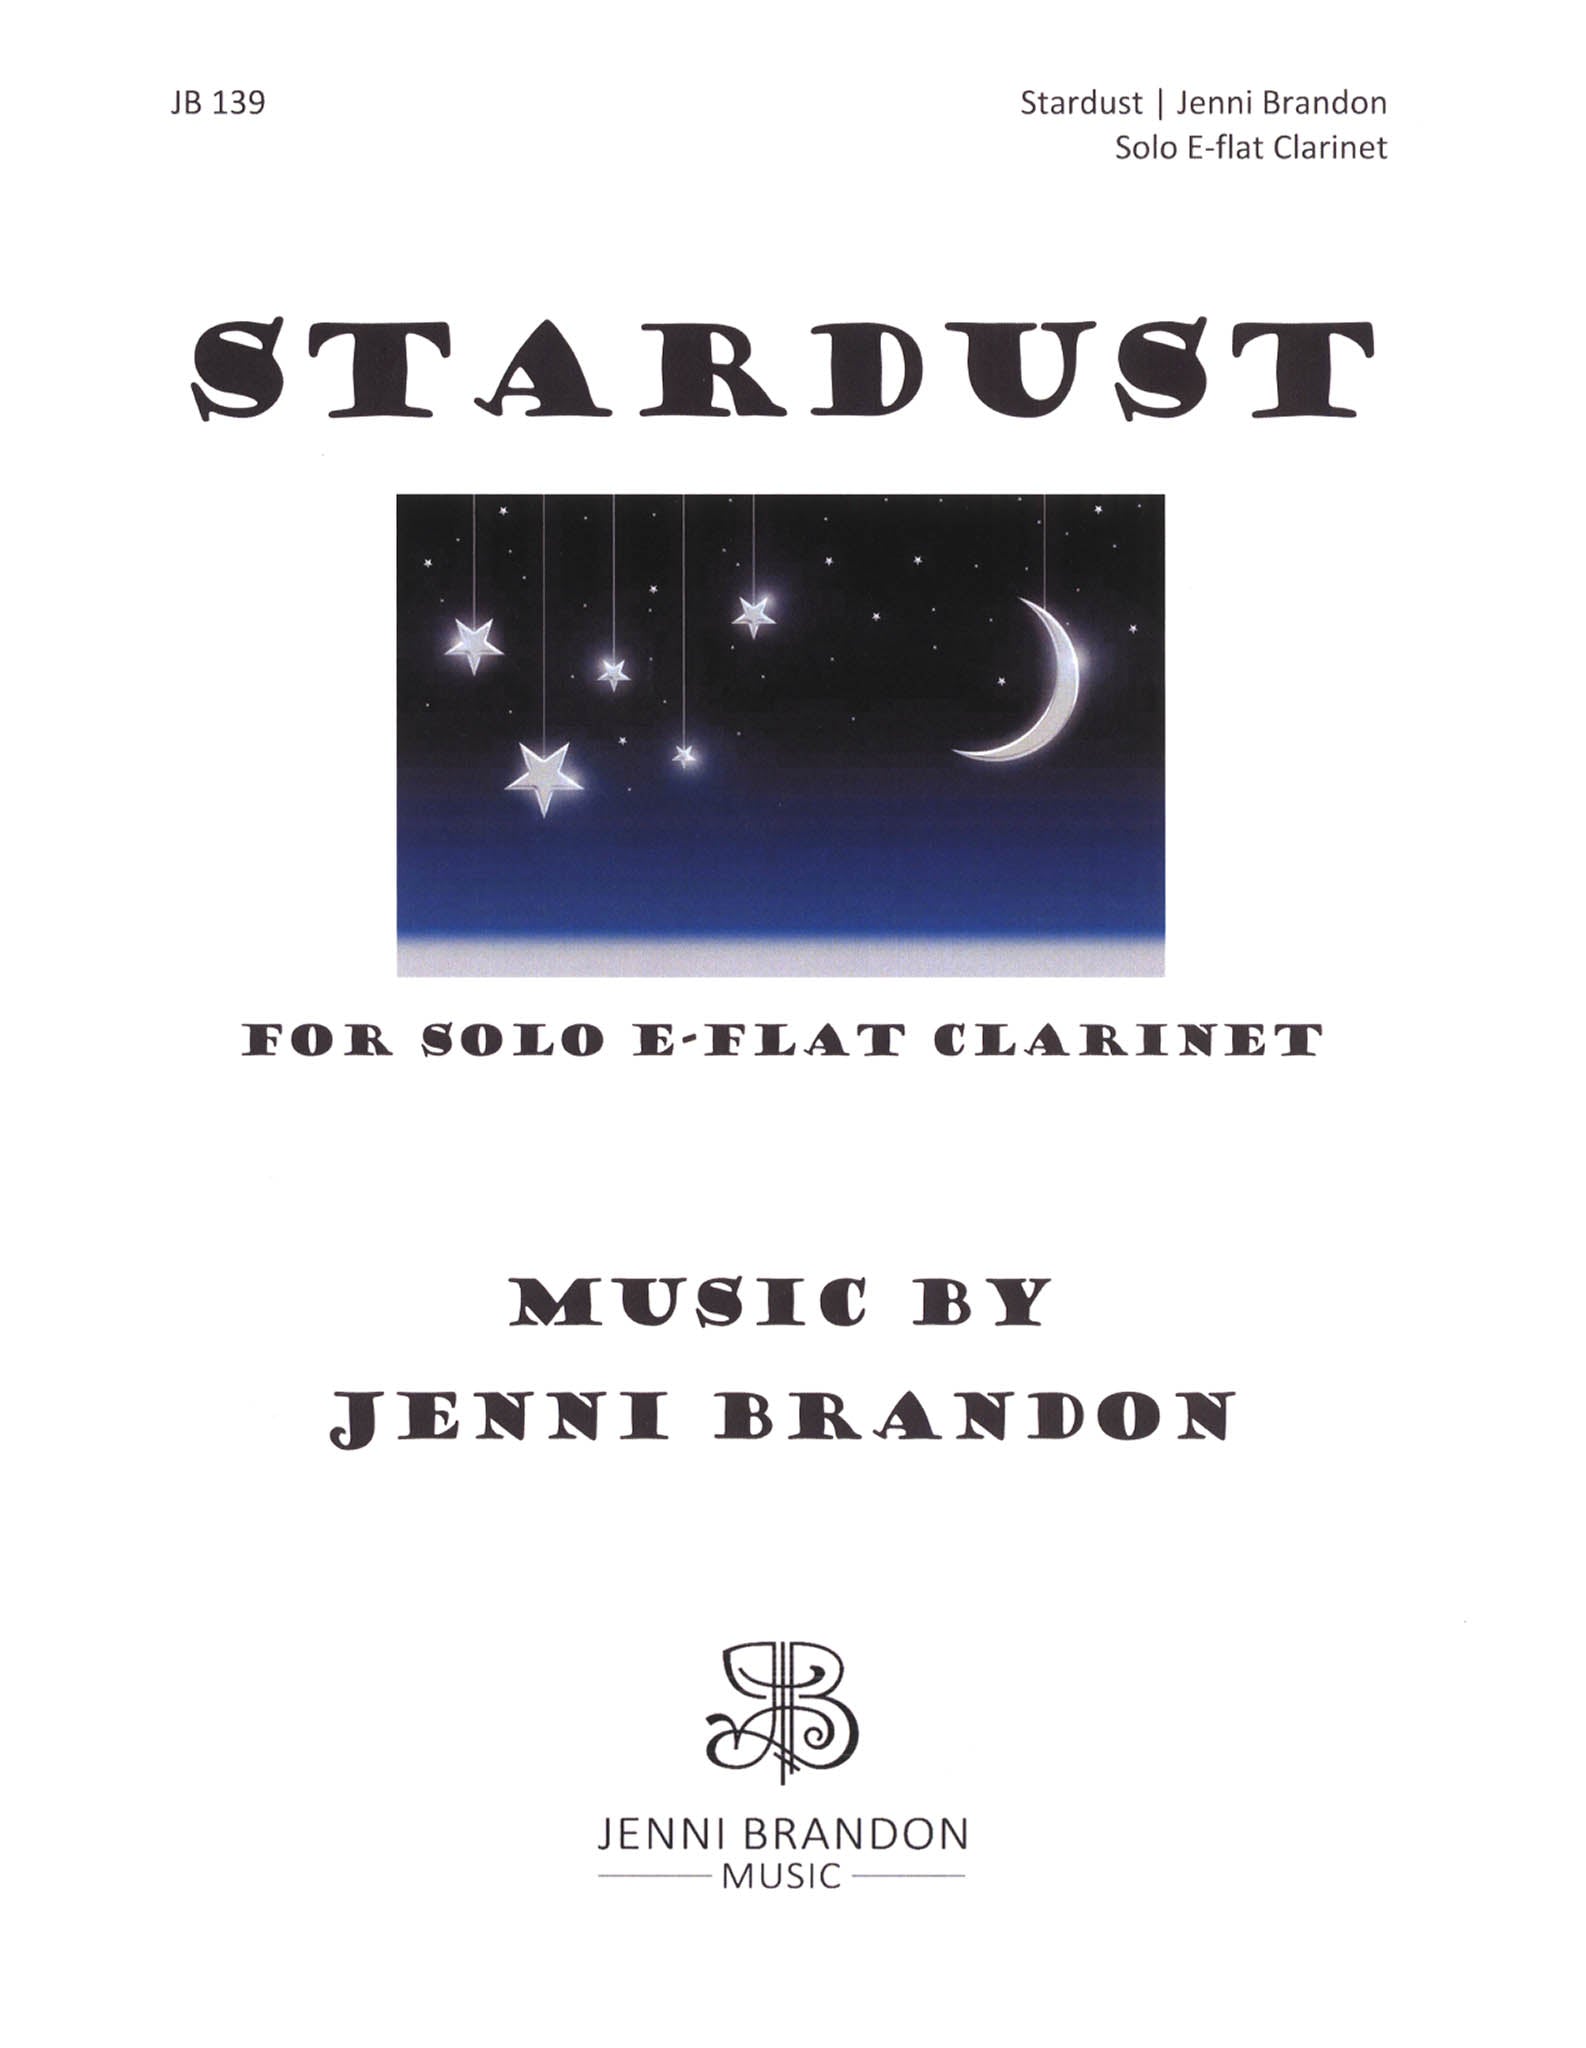 Jenni Brandon Stardust unaccompanied E-flat clarinet Cover